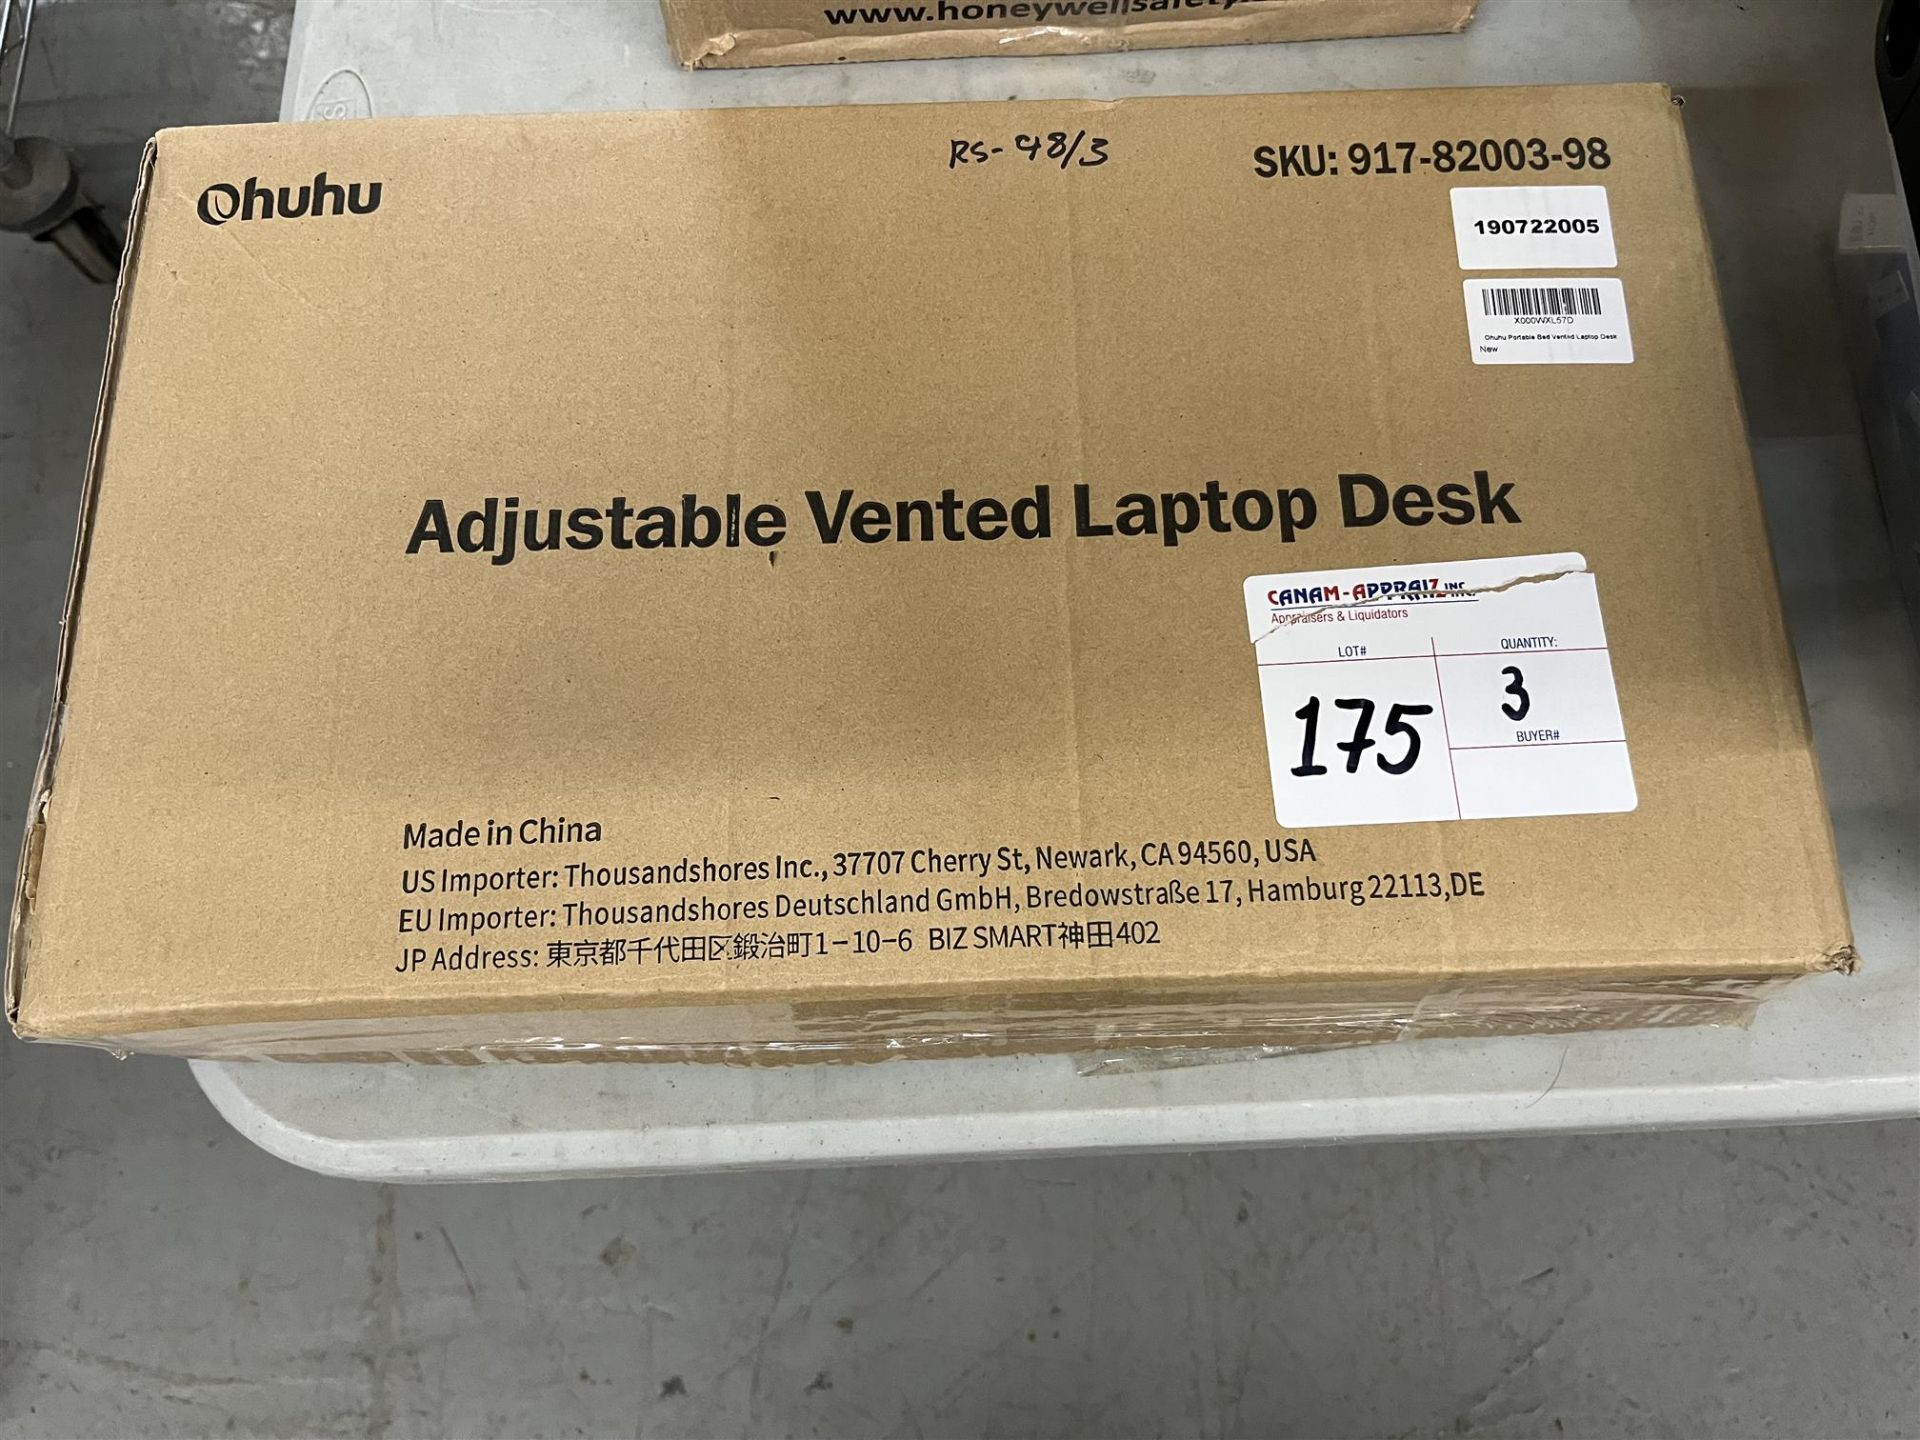 Huhu - Adjustable Portable Vented Laptop Desk - Mo#: X000WXL57D